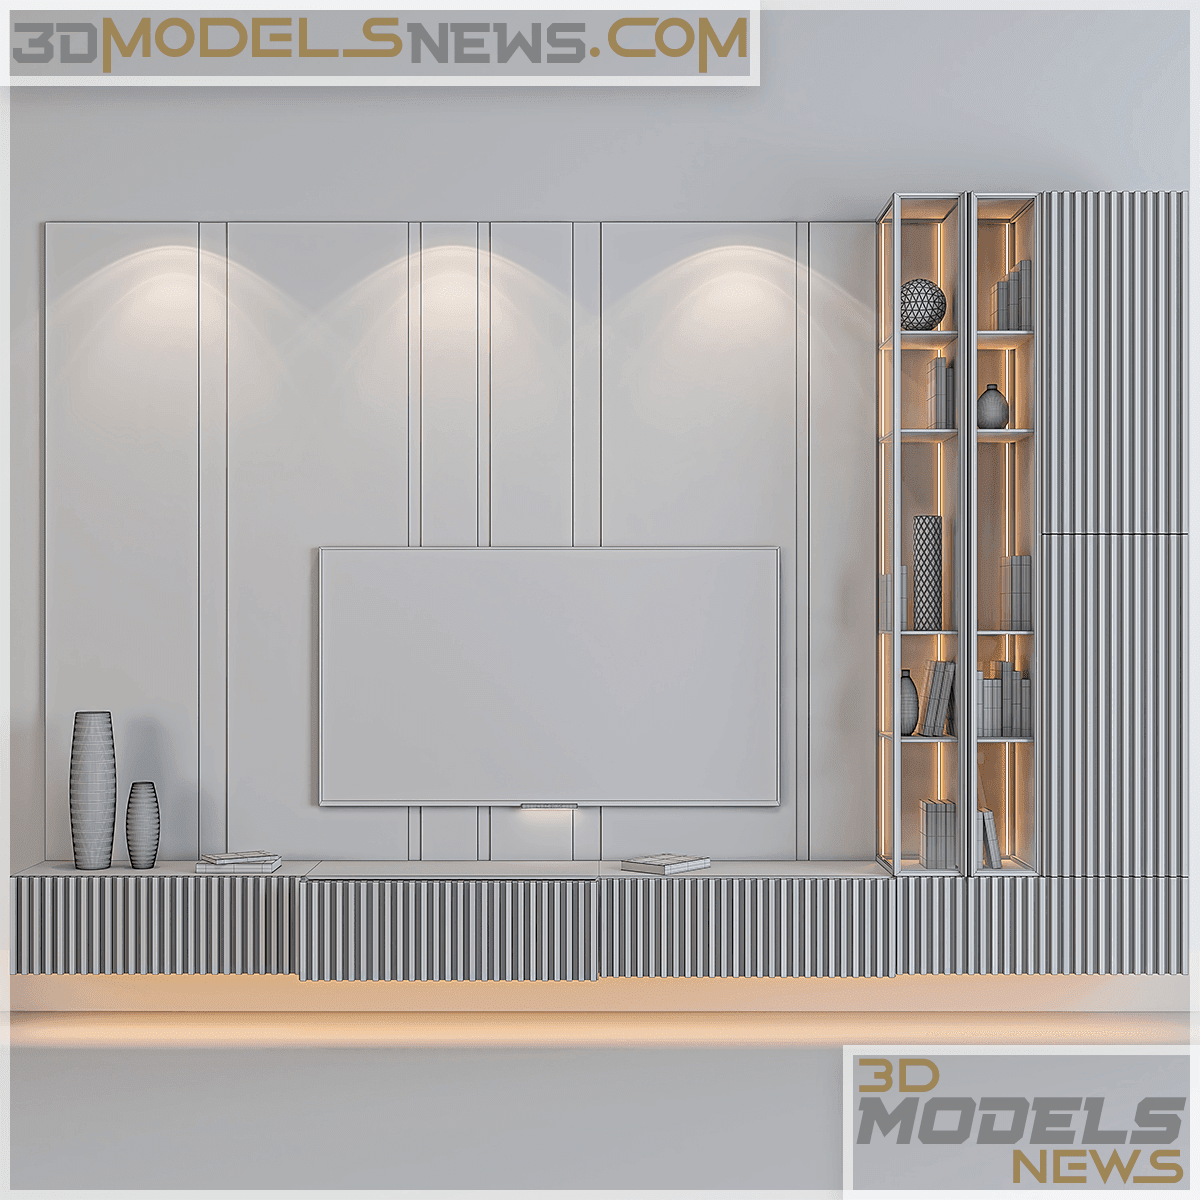 TV Wall Model Set 17 2